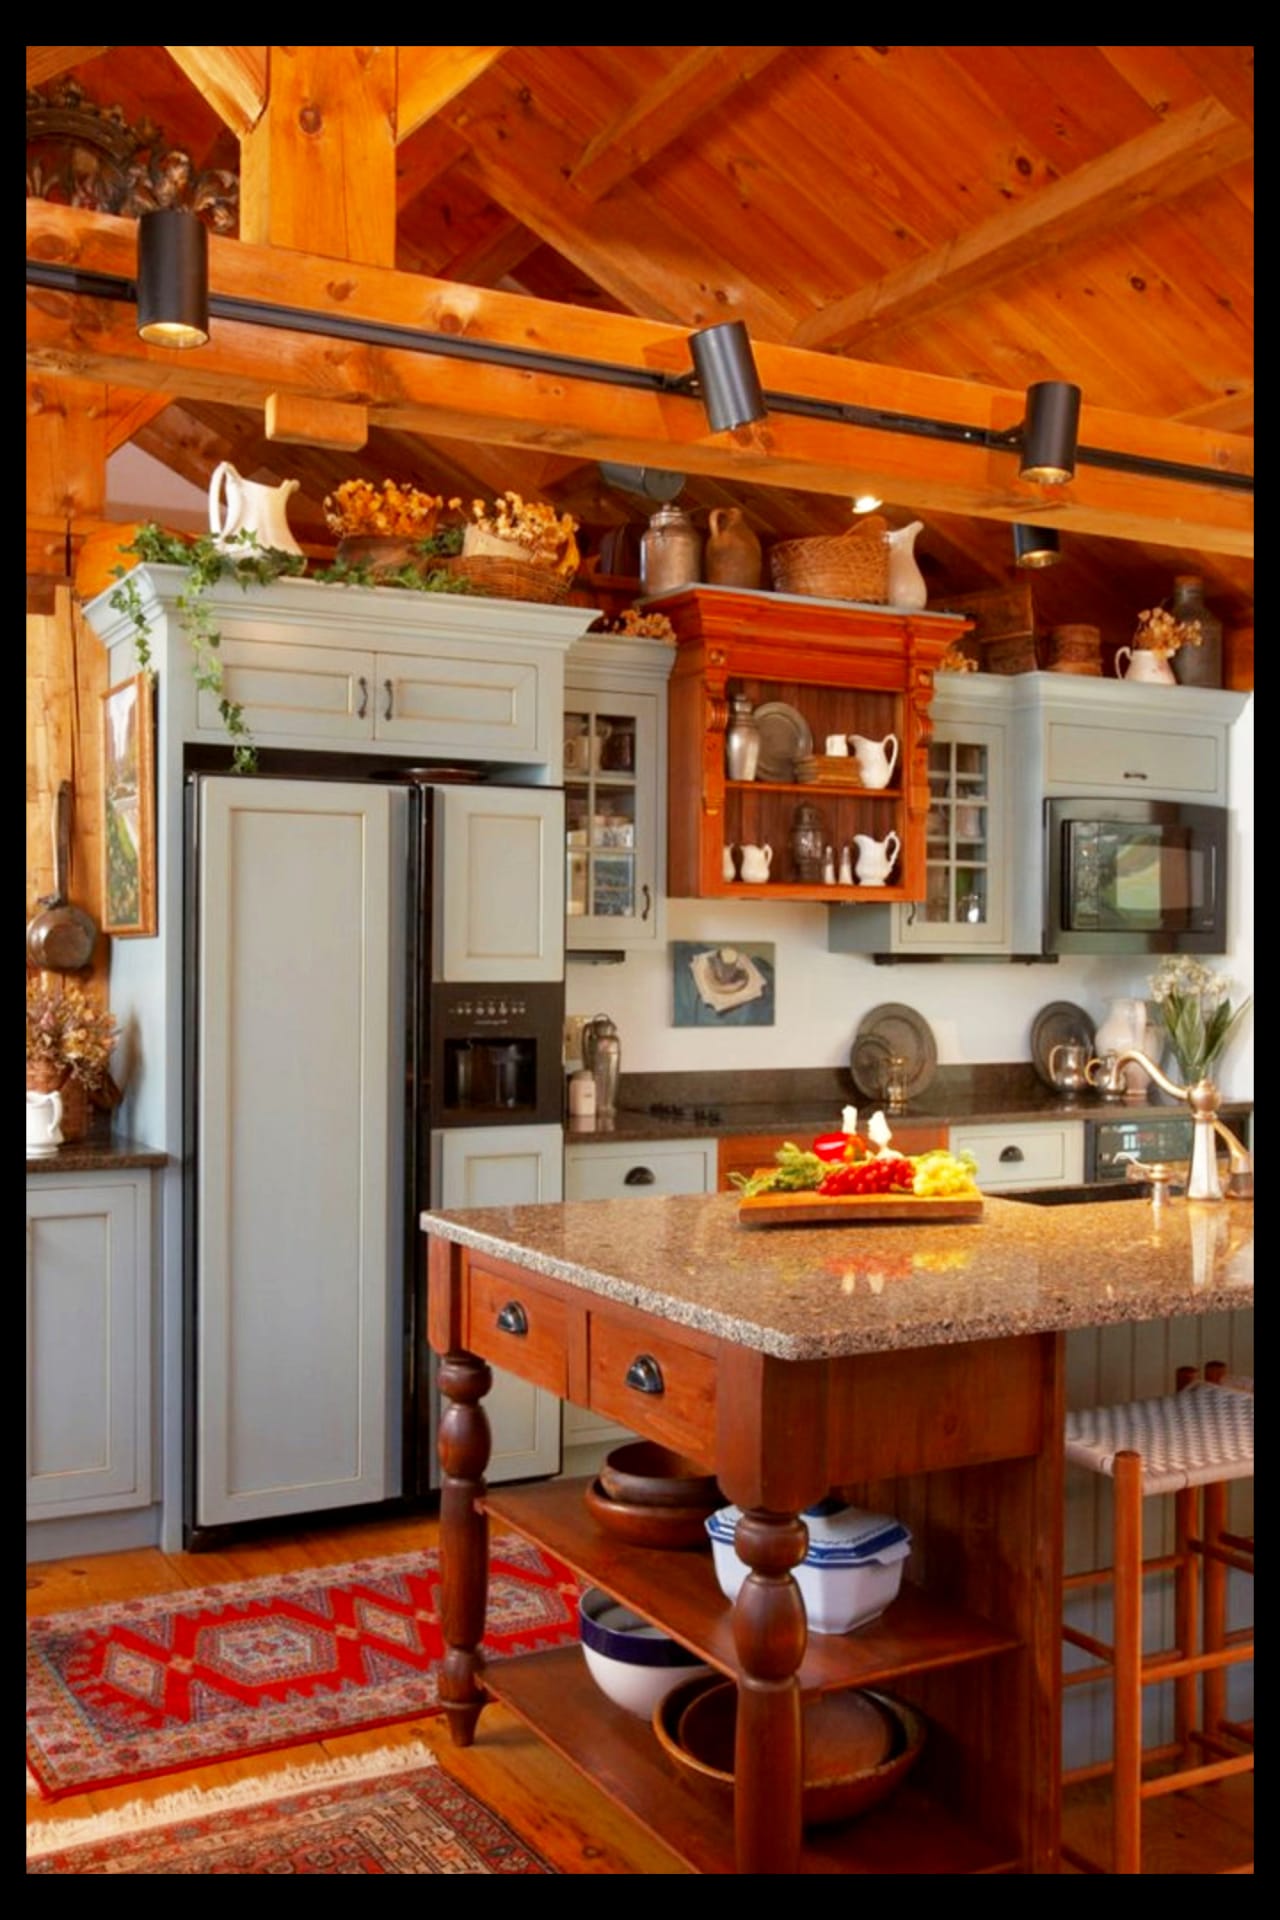 Rustic Farmhouse Kitchen Ideas - budget-friendly farmhouse kitchen decorating ideas - country cottage, lake house and rustic cabin kitchen decor on a budget